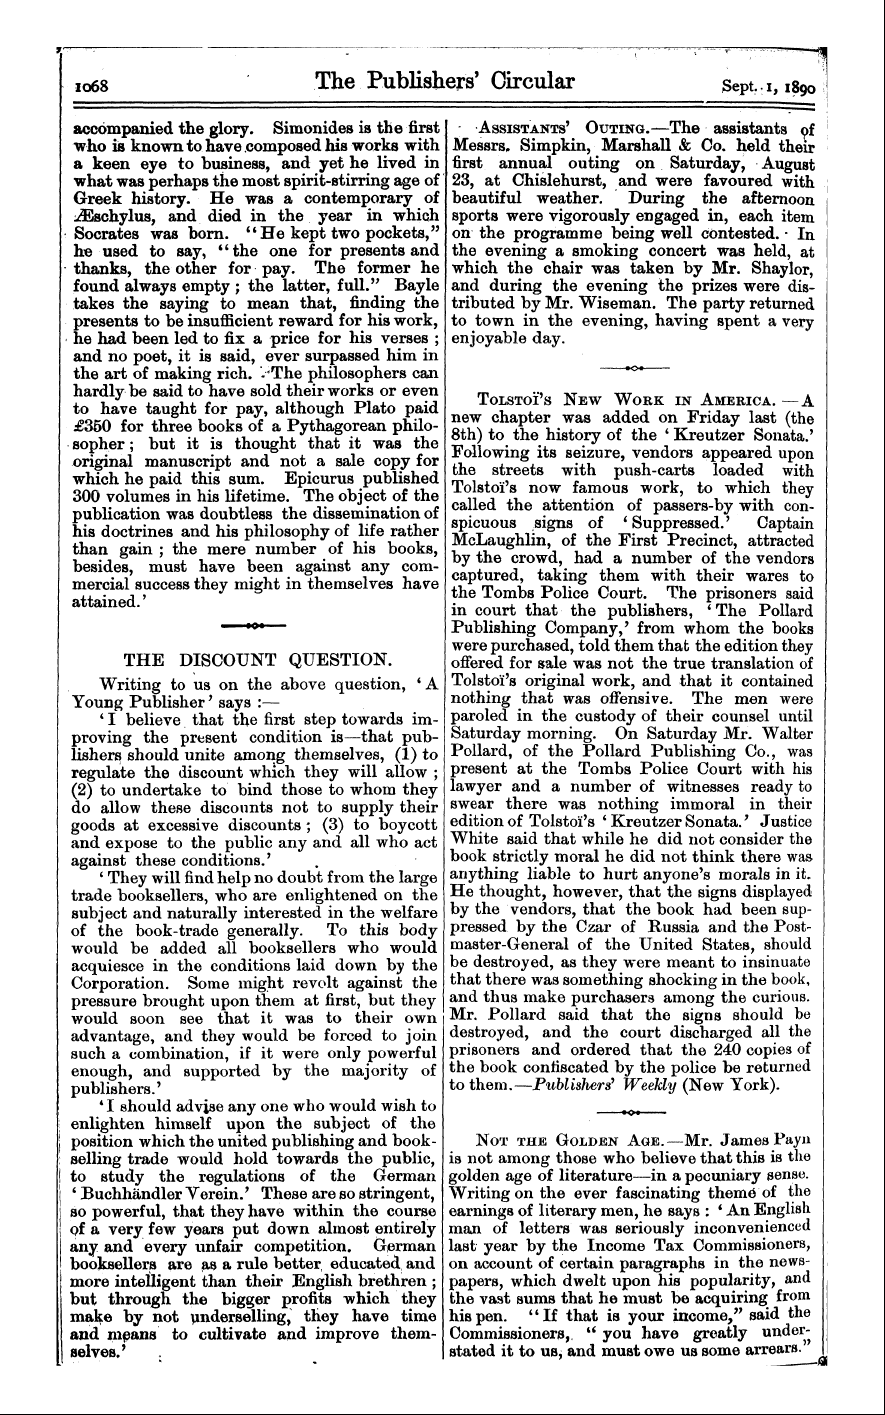 Publishers’ Circular (1880-1890): jS F Y, 1st edition: 14